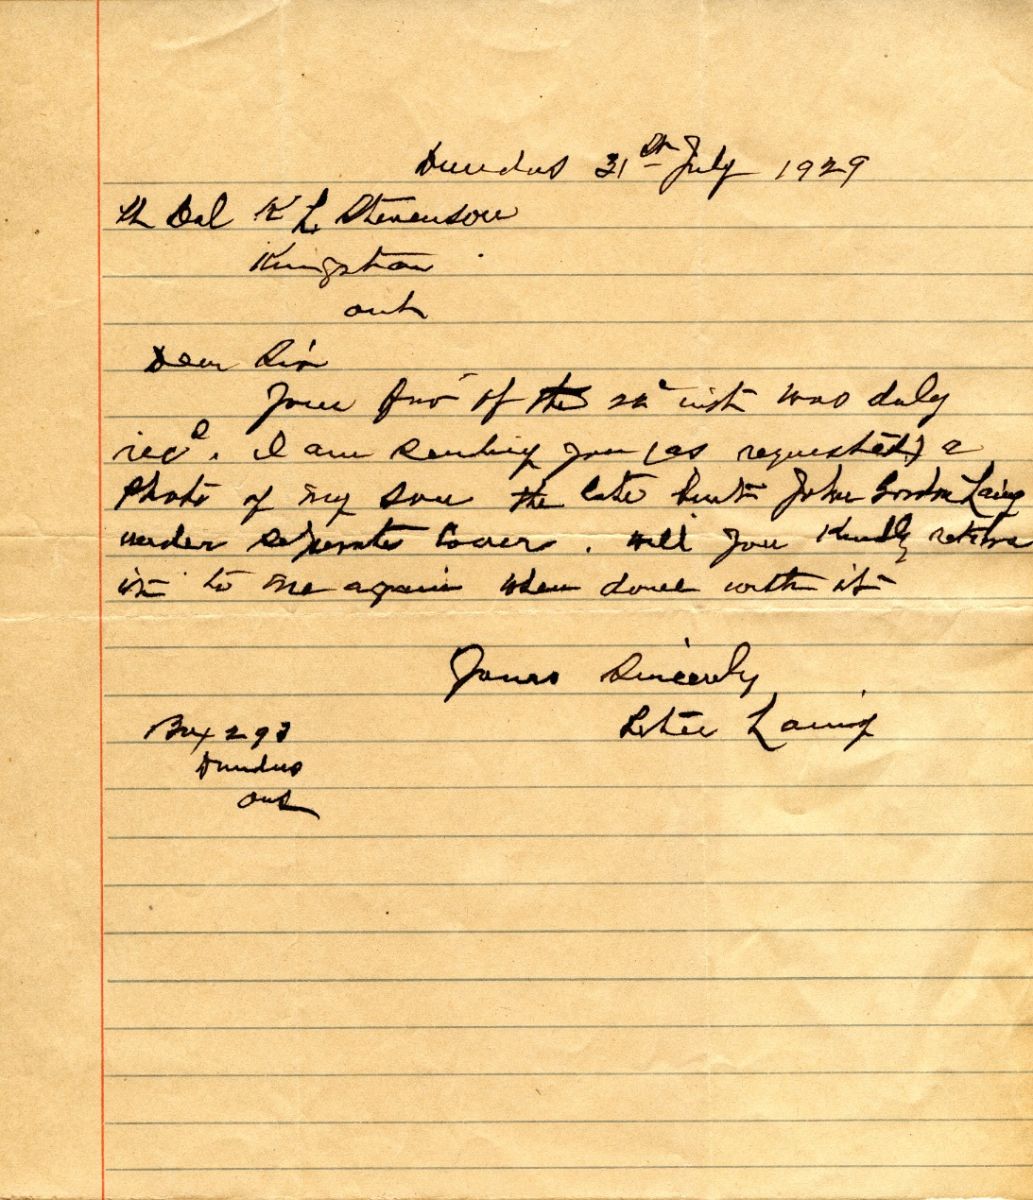 Letter from Peter Laing to :Lt. Col. K.L. Stevenson, 31st July 1929